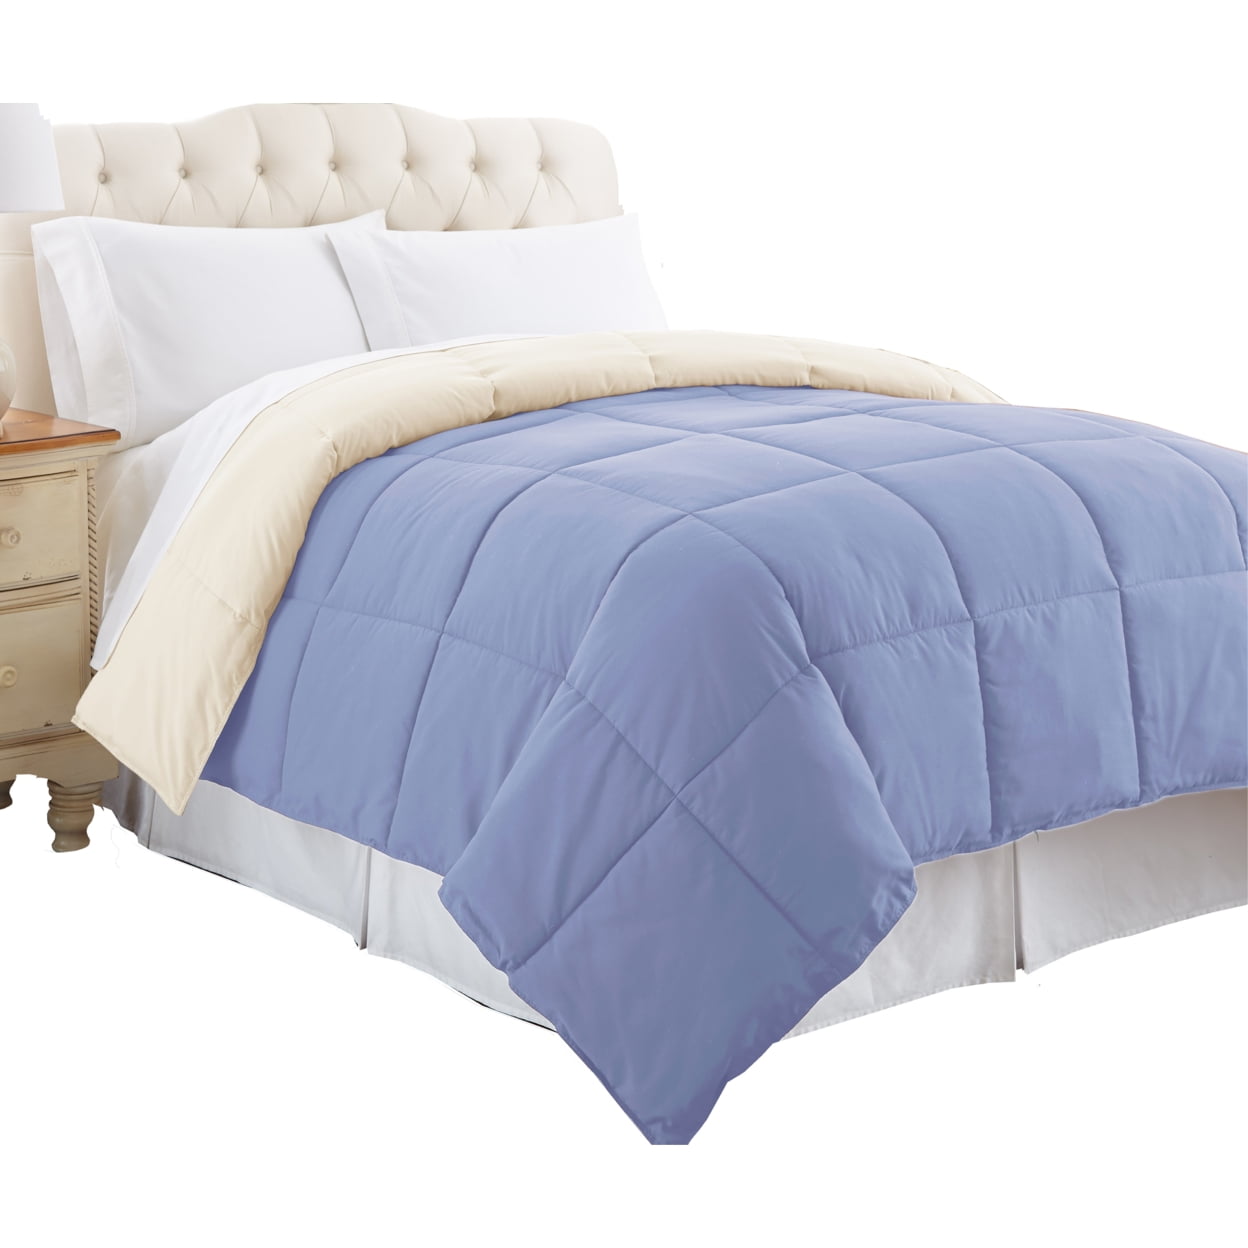 Bm202046 Genoa Queen Size Box Quilted Reversible Comforter, Blue & Cream